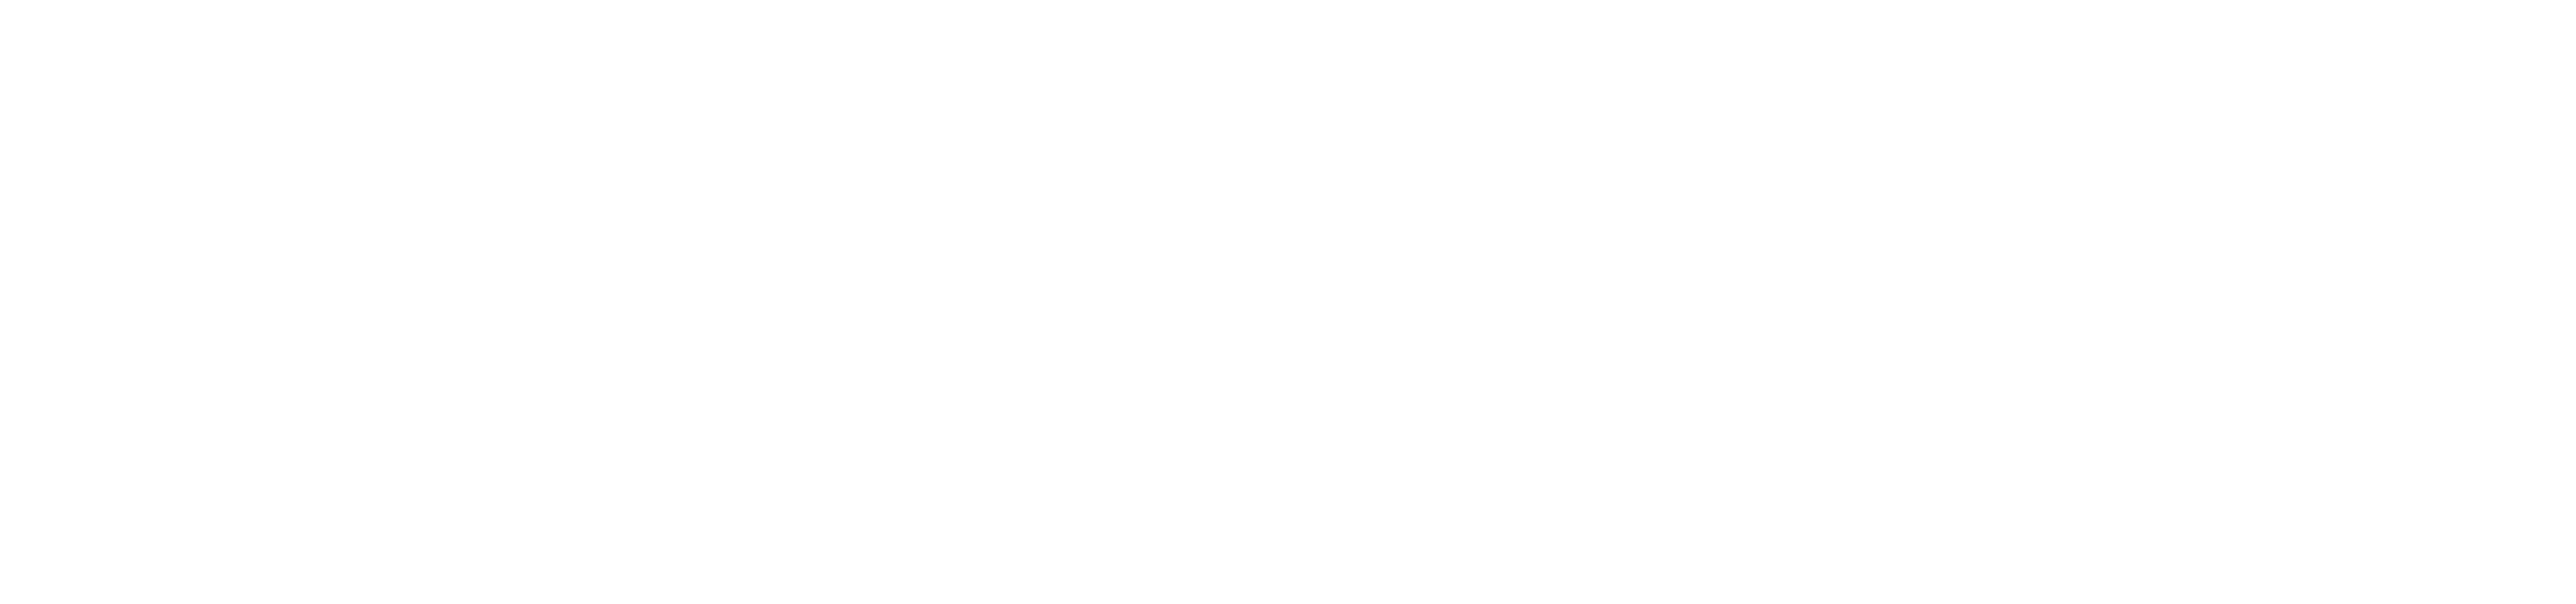 level66.network